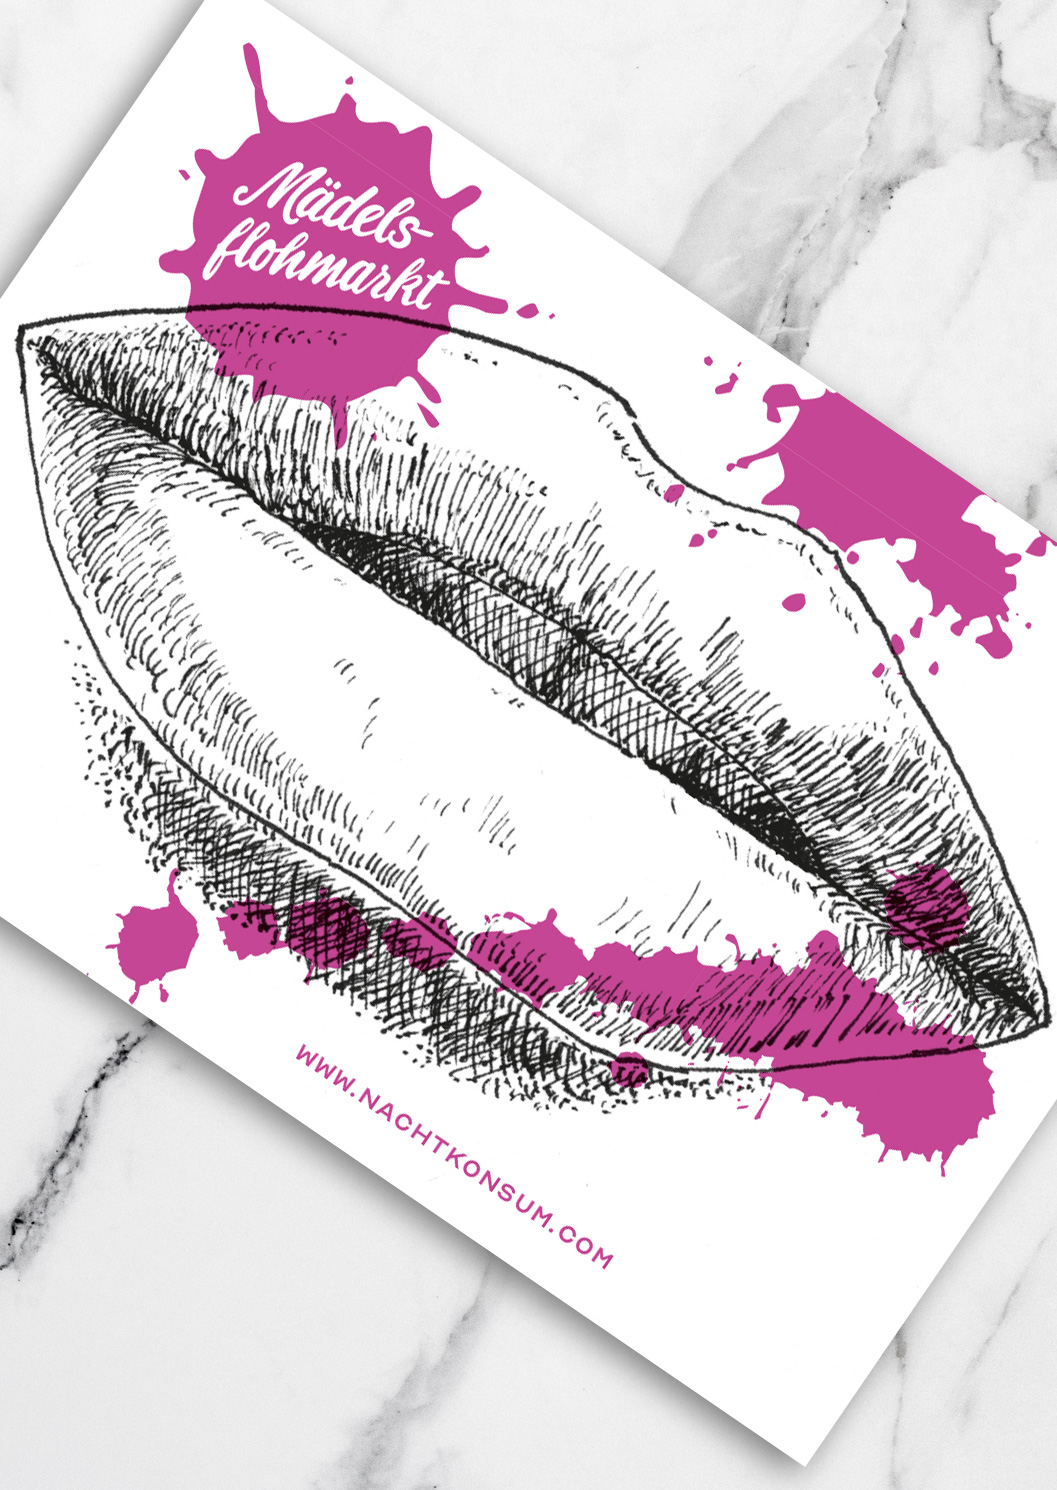 Illustration for folder, lips, girls mouth, Unfolded page for "Mädelsflohmarkt" / Girls Fleamarket, Munich, Düsseldorf,